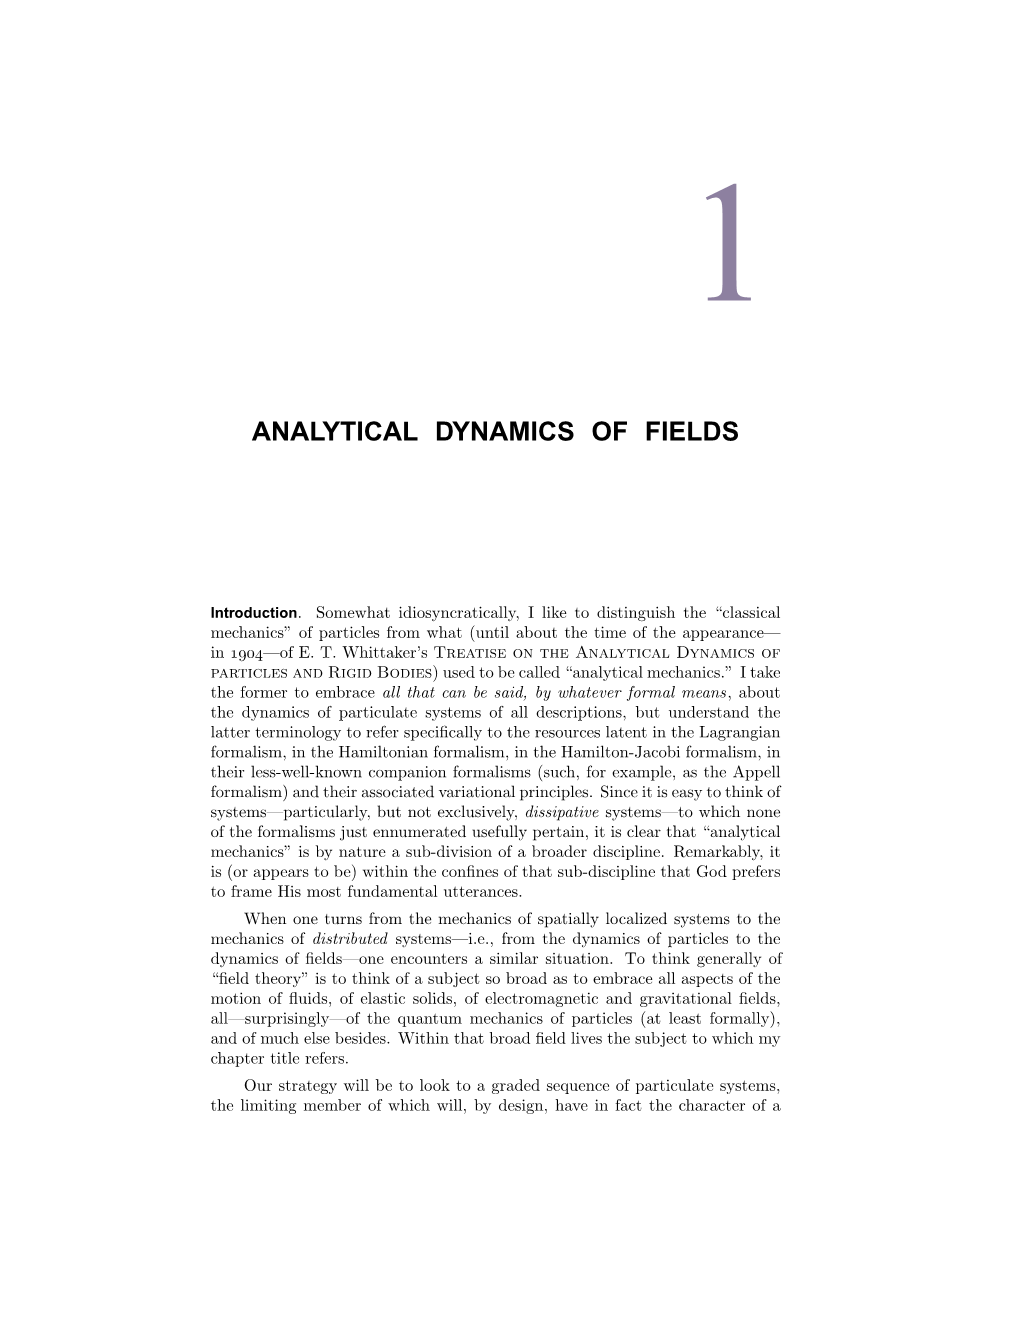 Analytical Dynamics of Fields